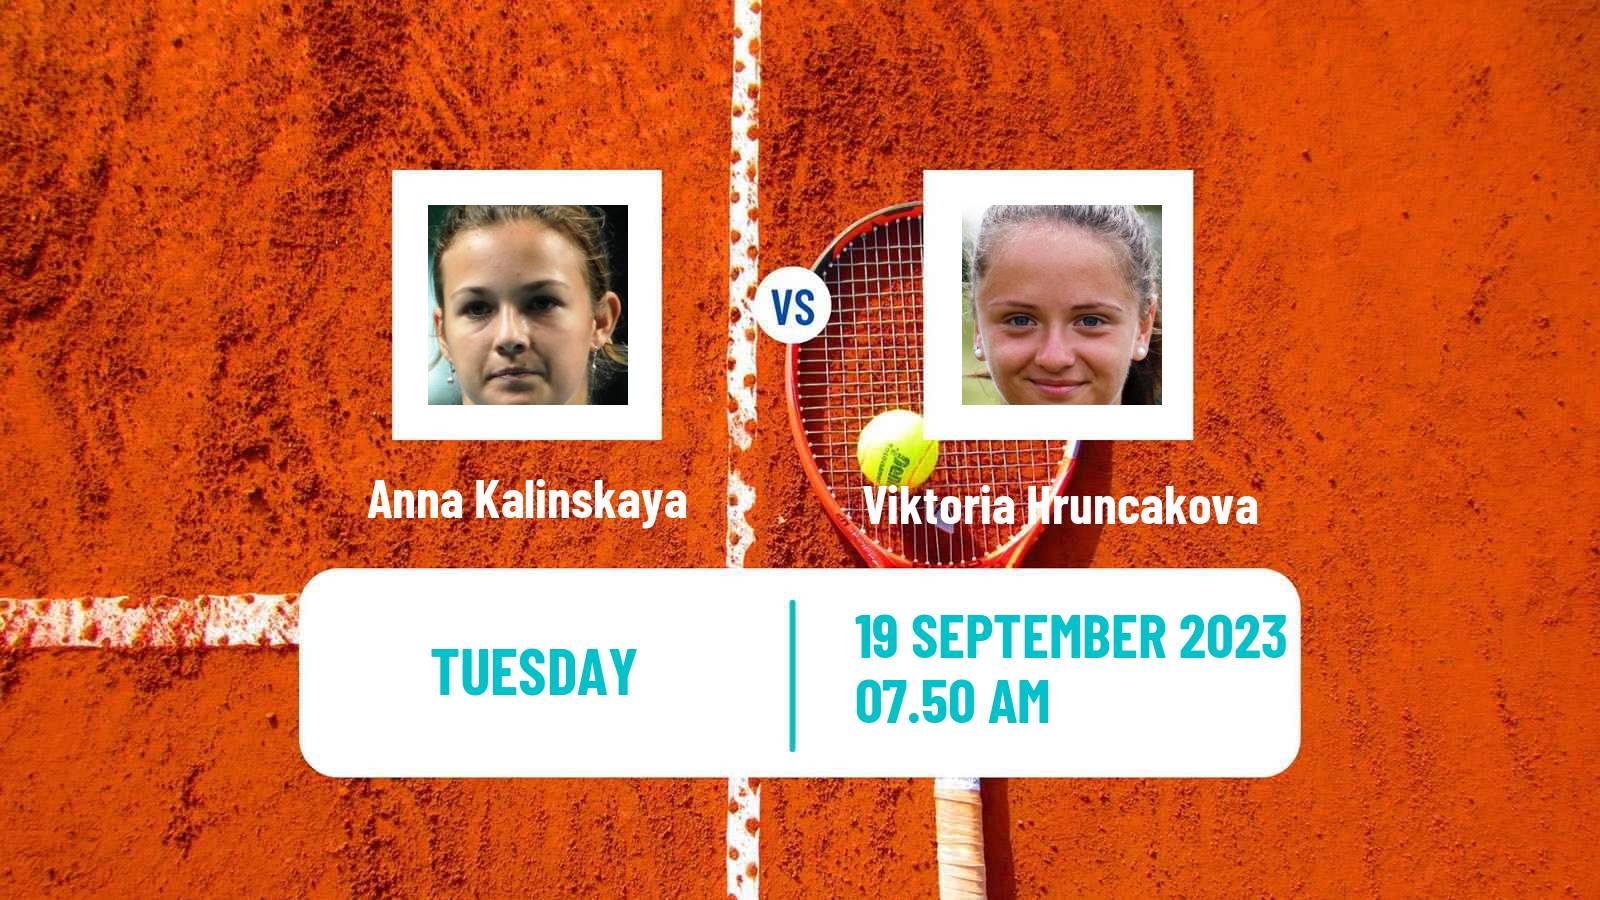 Tennis WTA Guangzhou Anna Kalinskaya - Viktoria Hruncakova